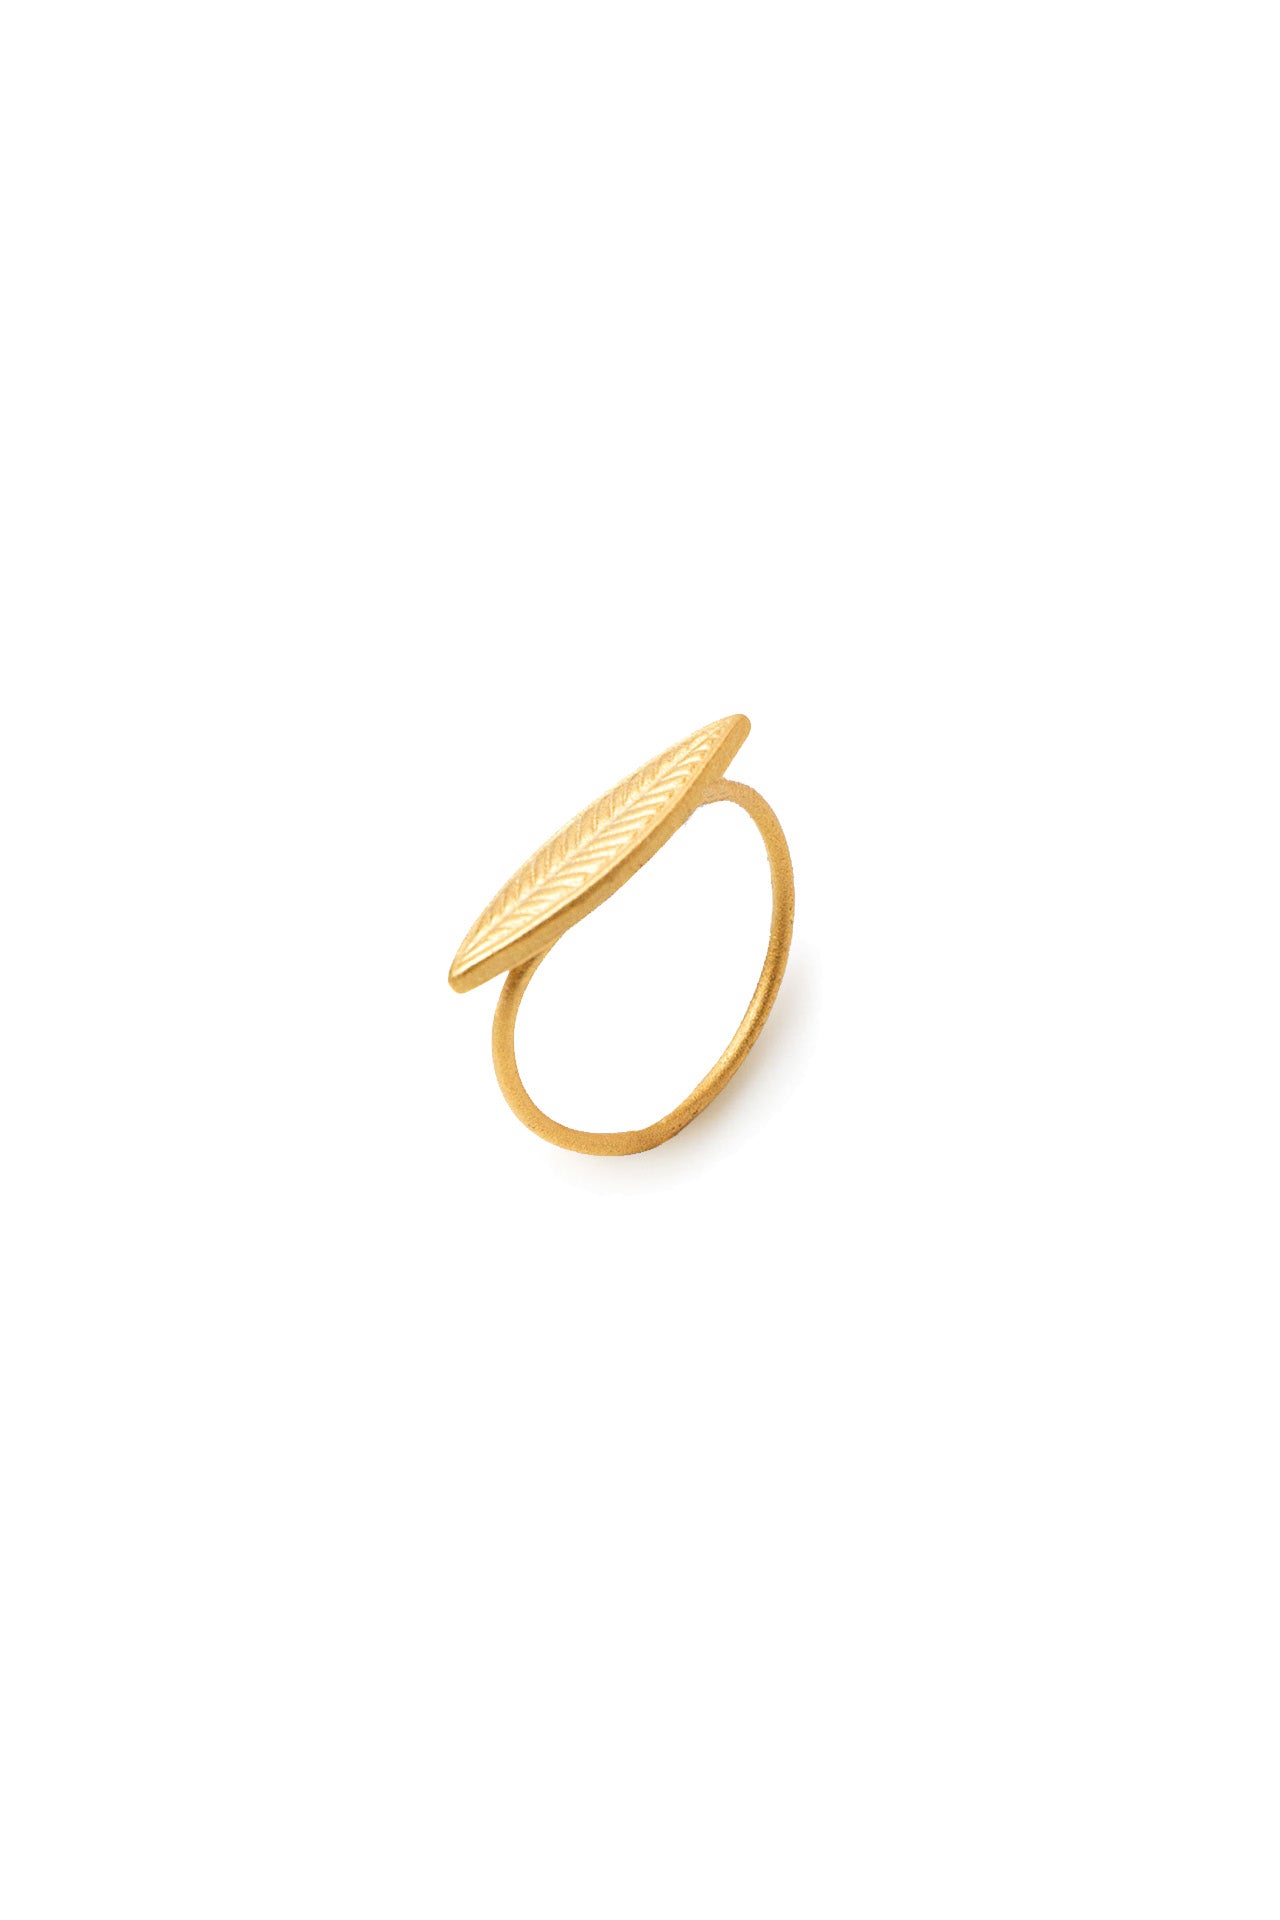 Simple adjustable Leaf ring in 24ct gold plating